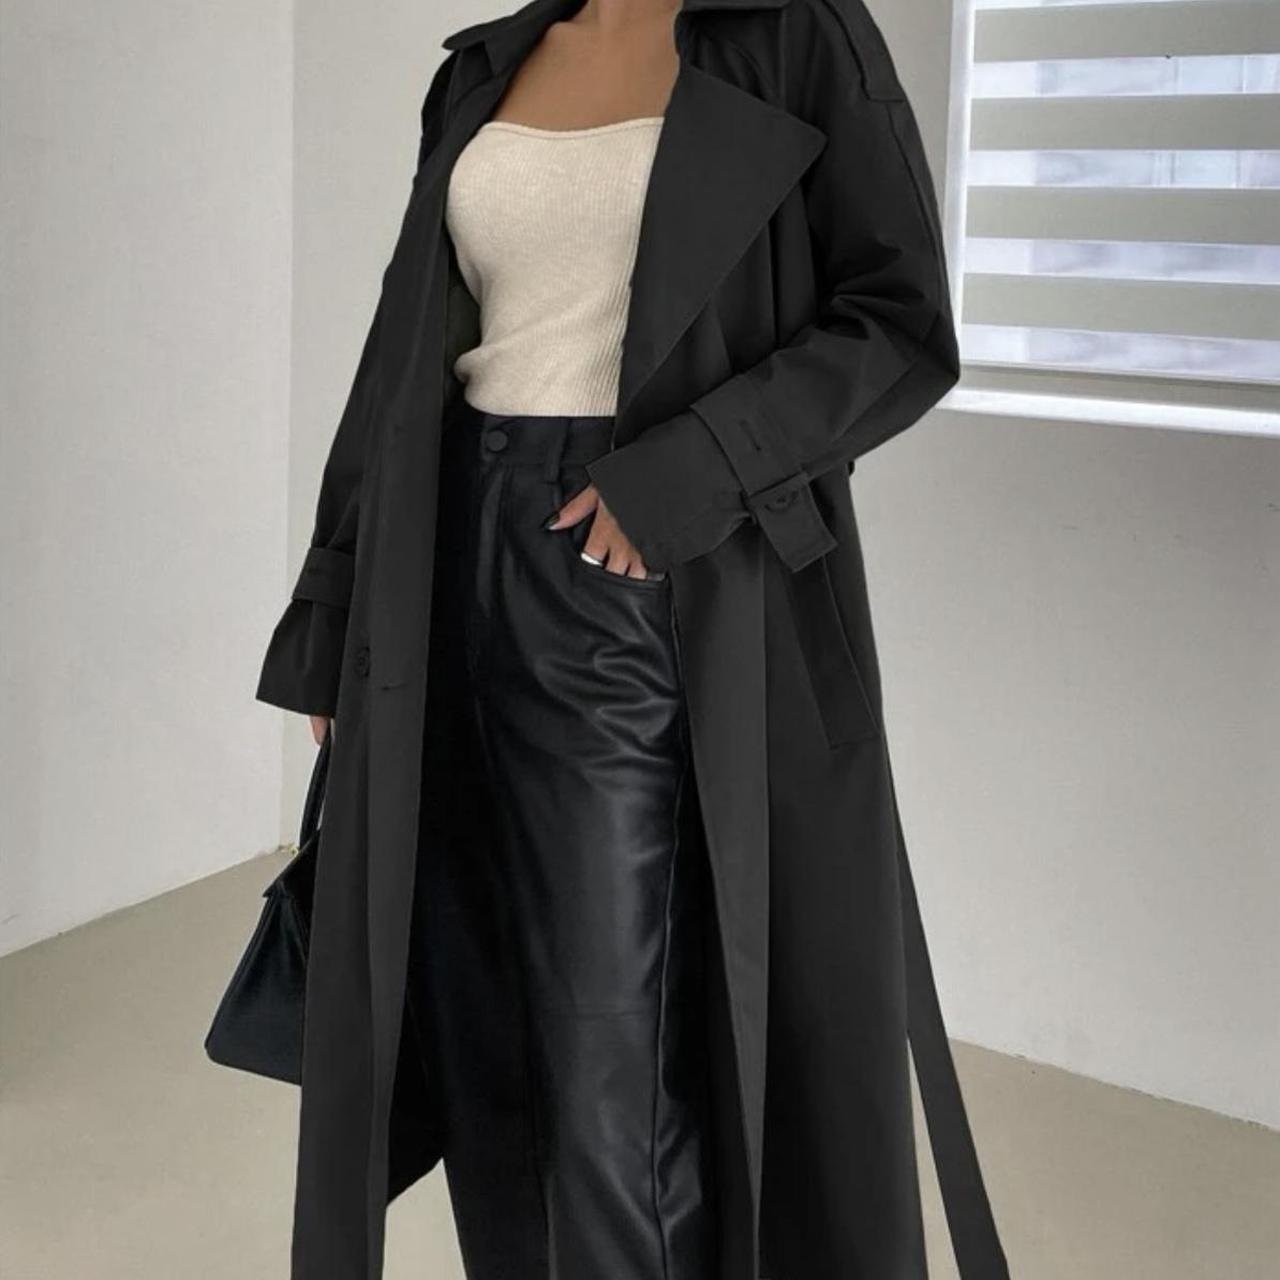 SHEIN Women's Black Coat | Depop